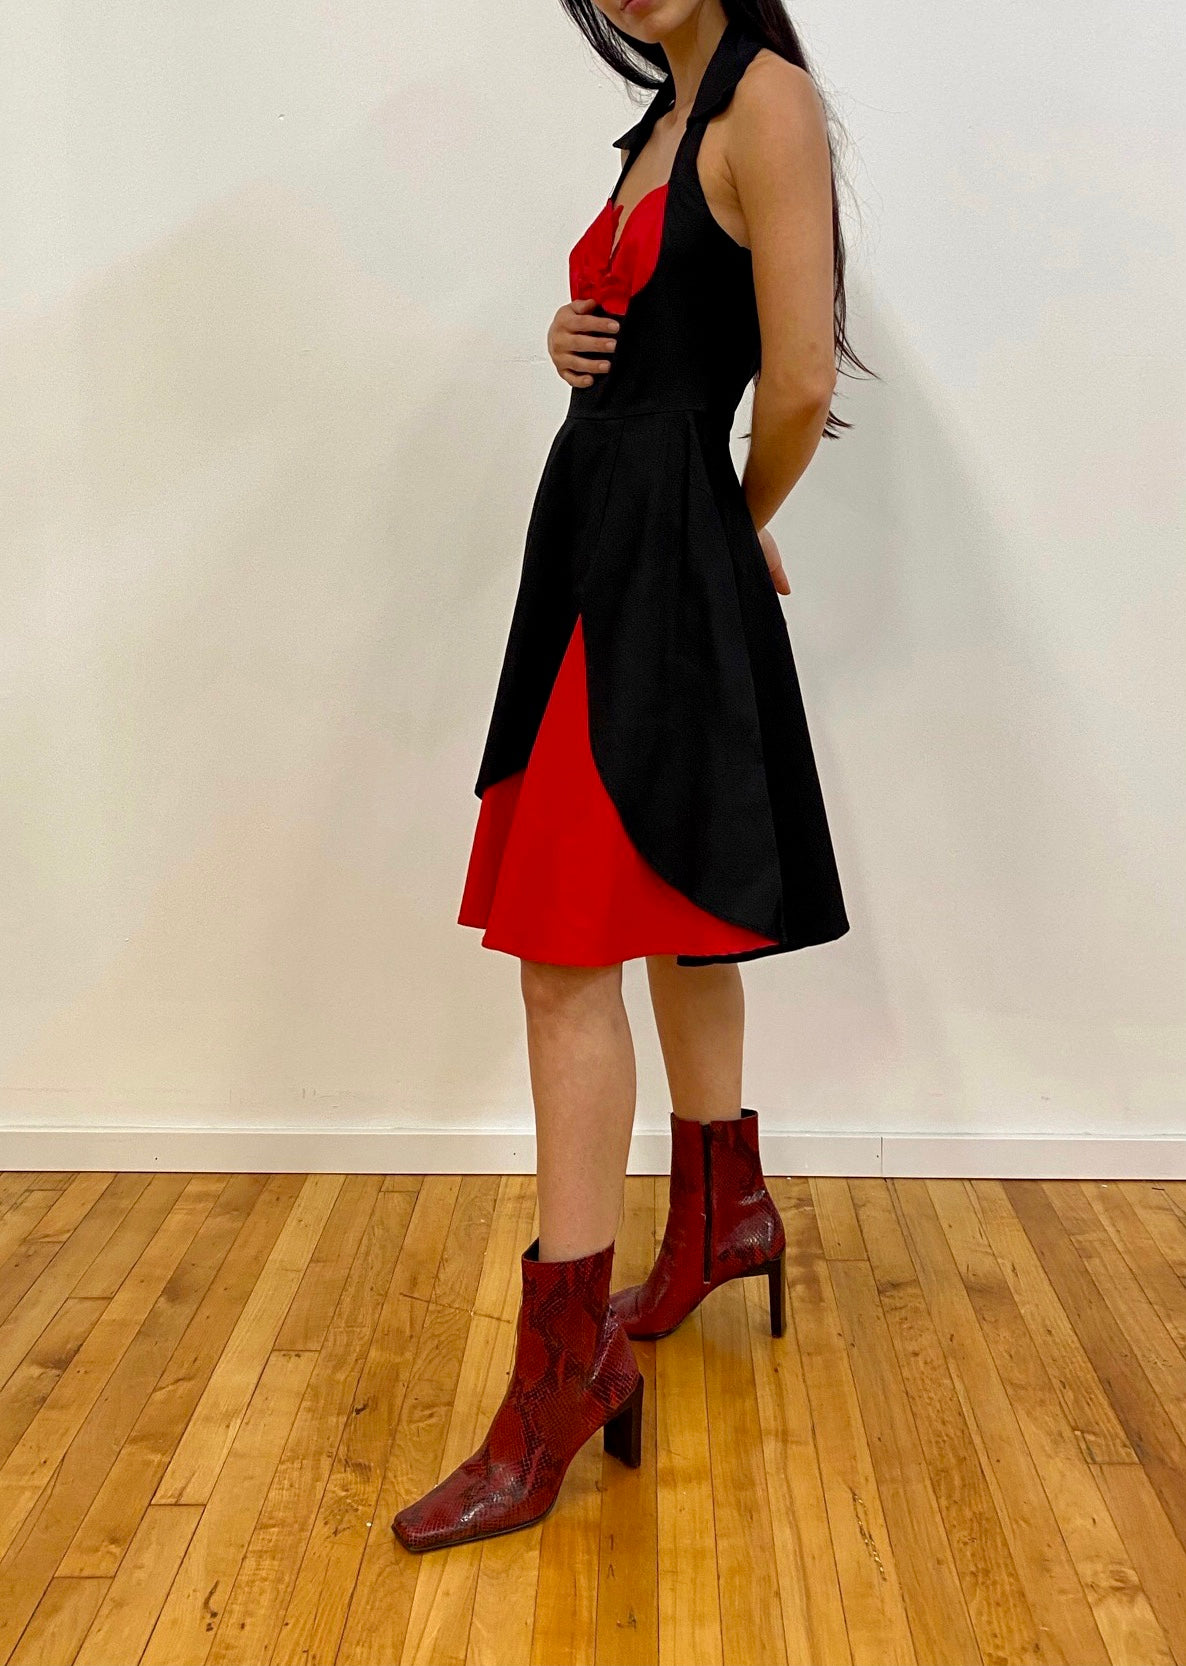 Retro Black and Red Halter Dress